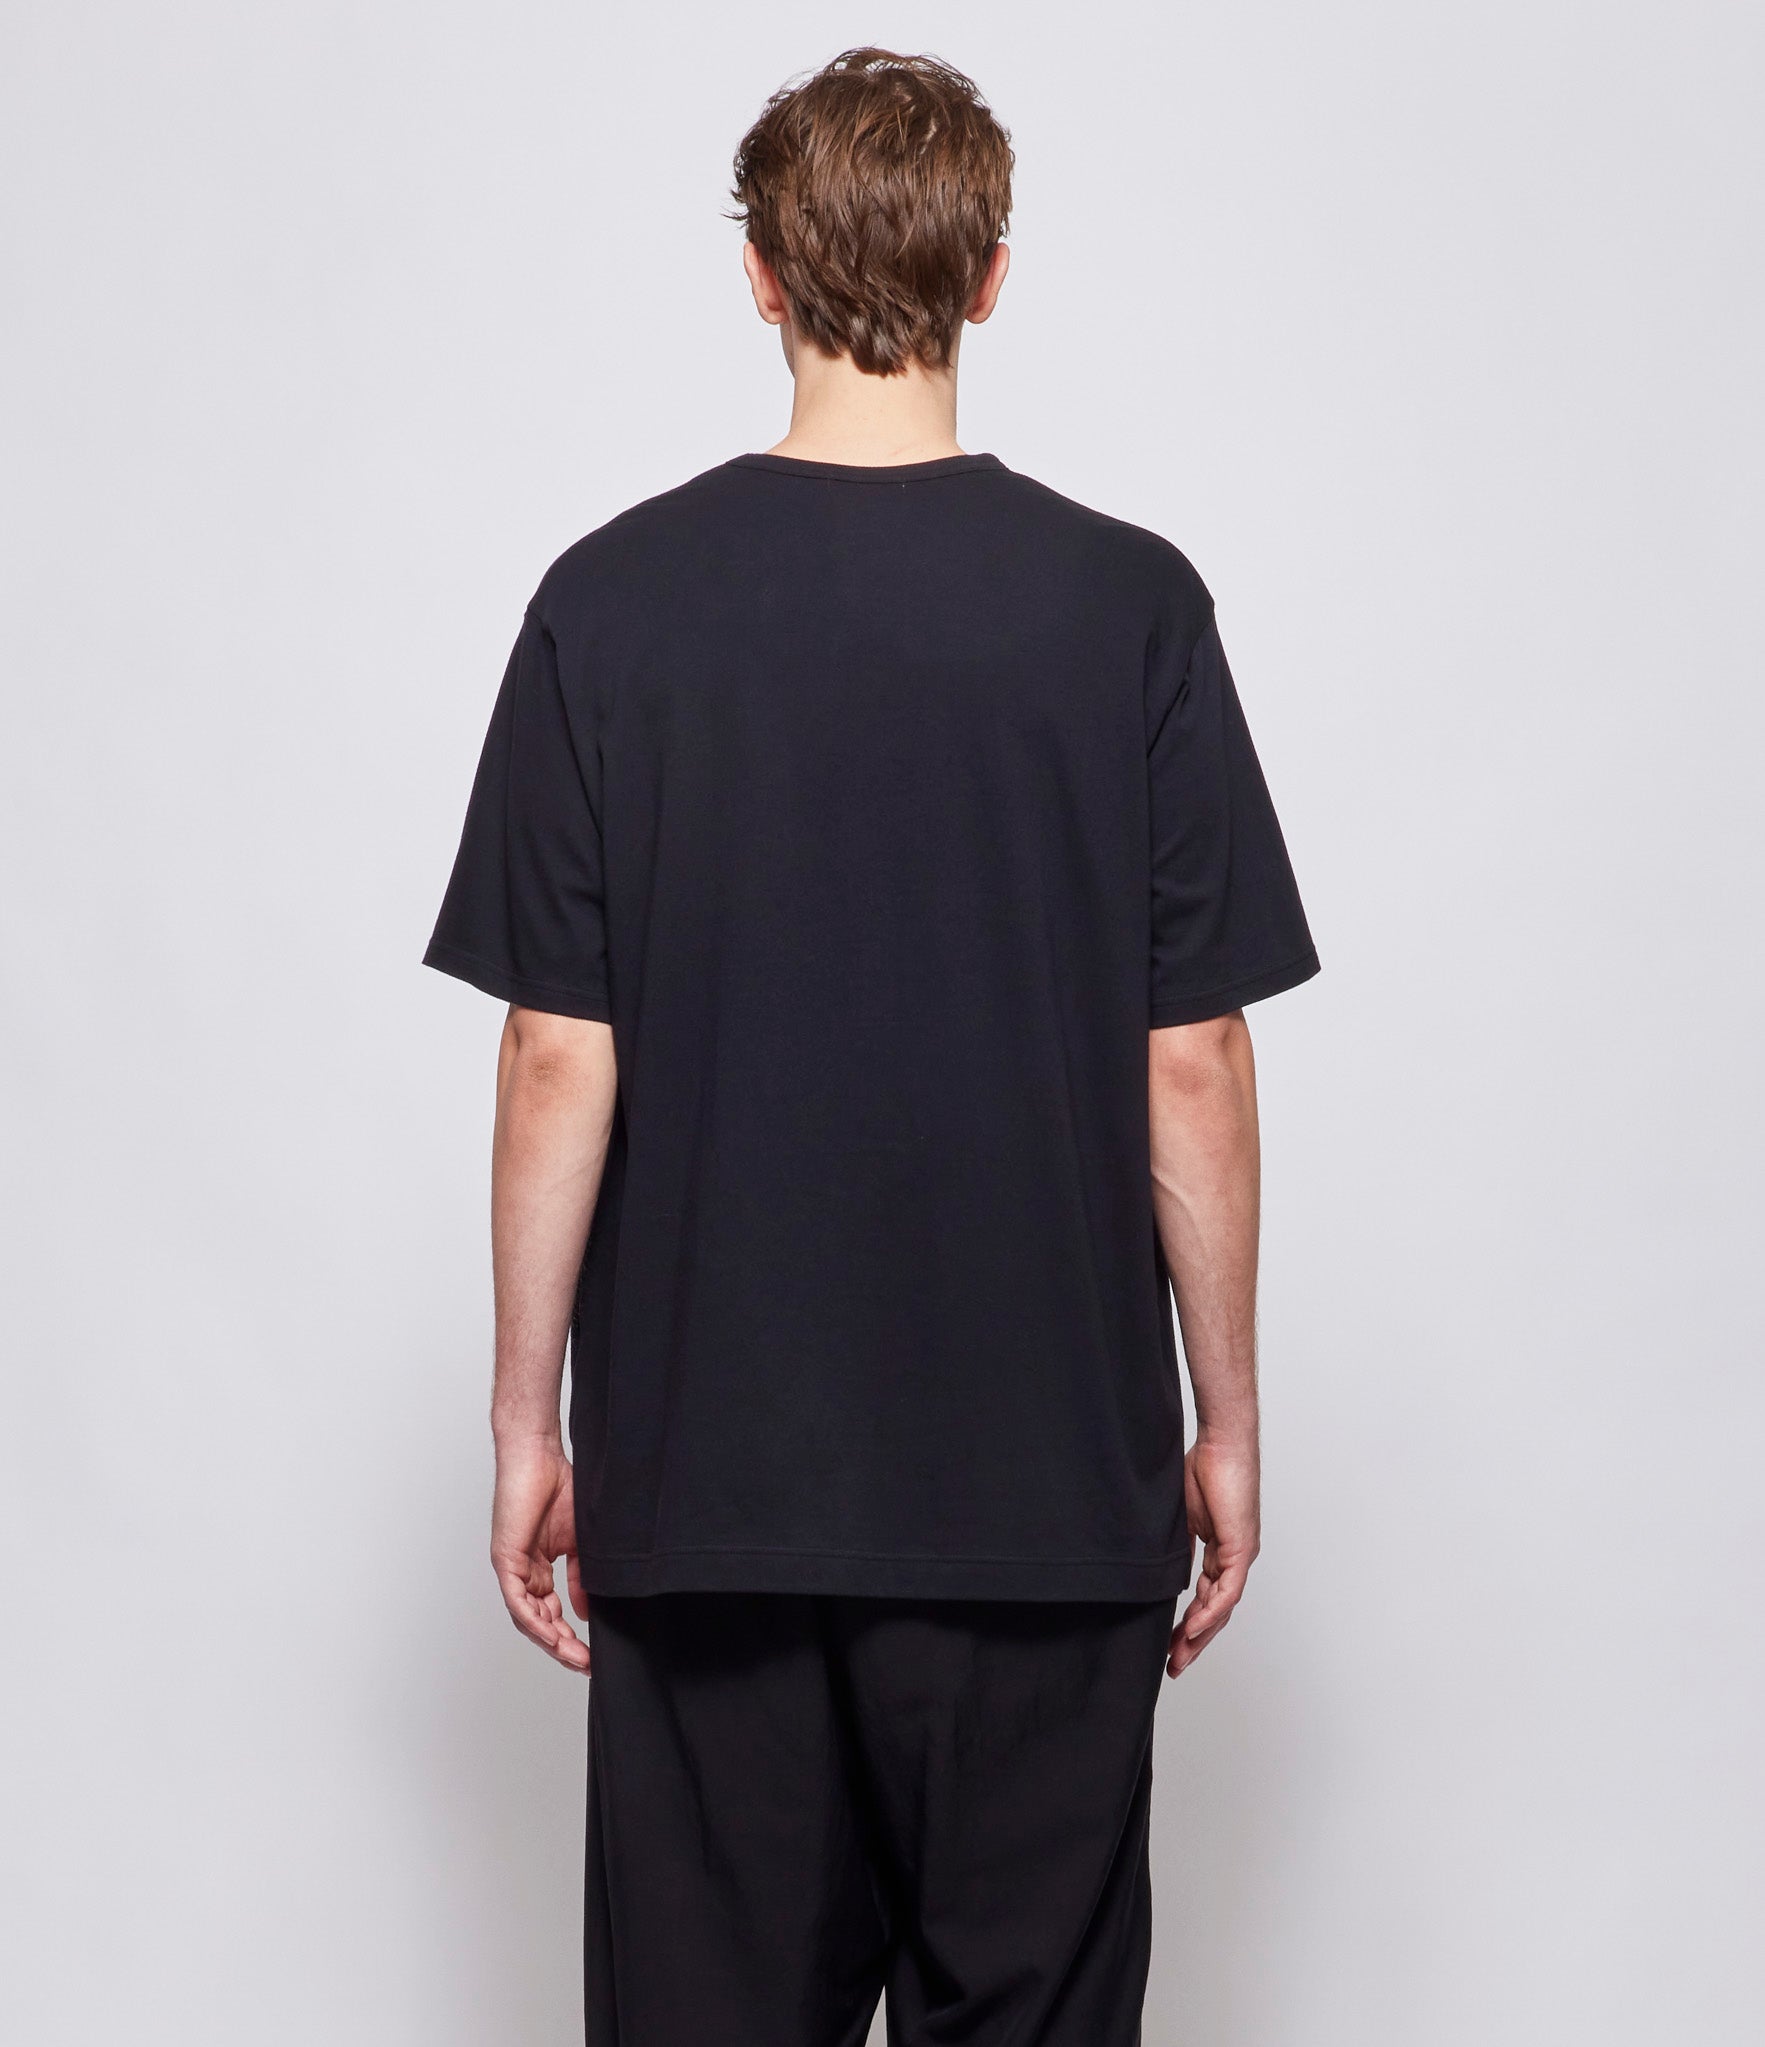 Yohji Yamamoto Pour Homme Black PT Short Sleeve Shirt